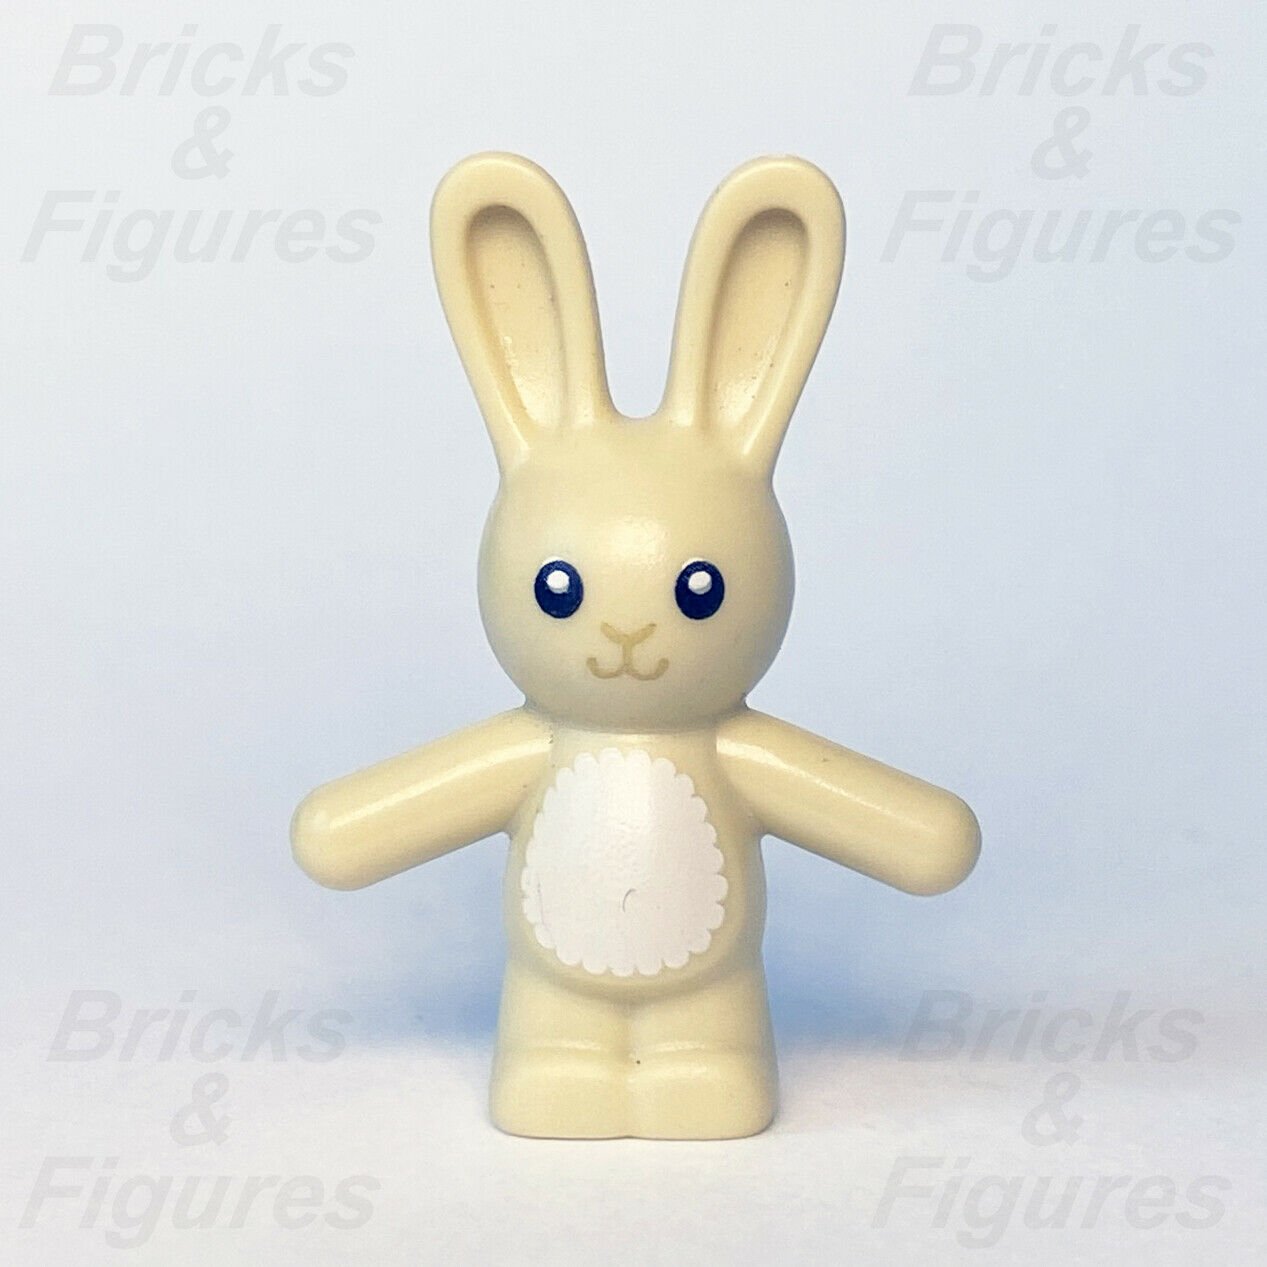 New Ideas LEGO Bunny Rabbit Teddy Animal Collectible Minifigure Part 21324 - Bricks & Figures